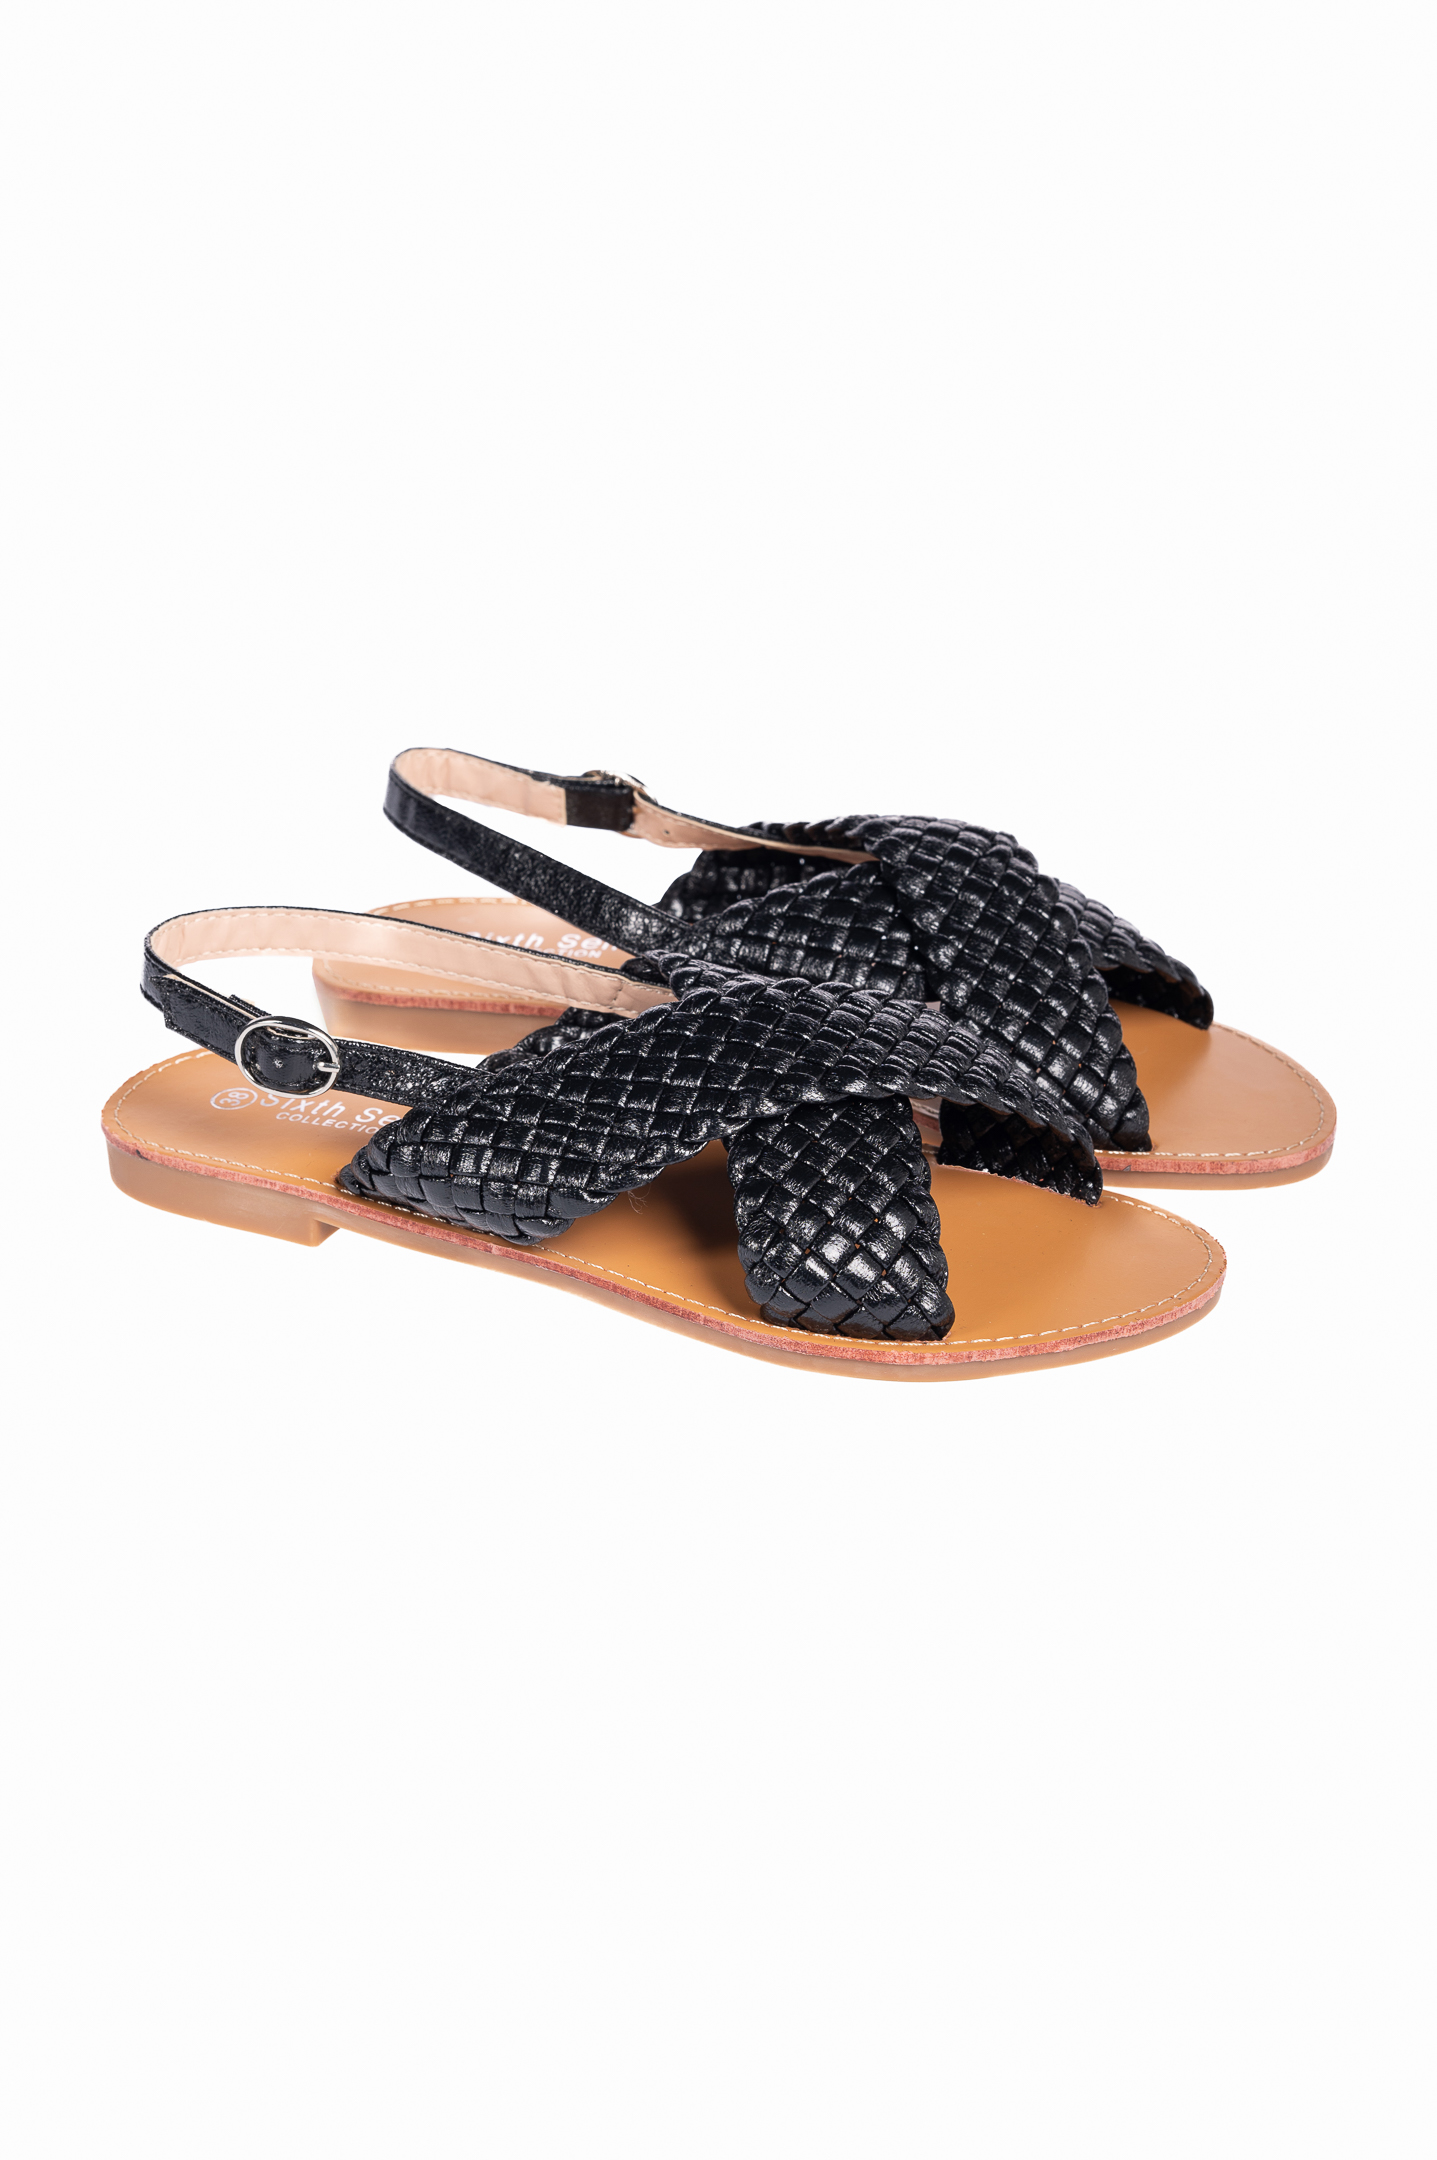 Flat σανδάλια με πλεκτό σχέδιο - Μαύρο Παπούτσια > Σανδάλια